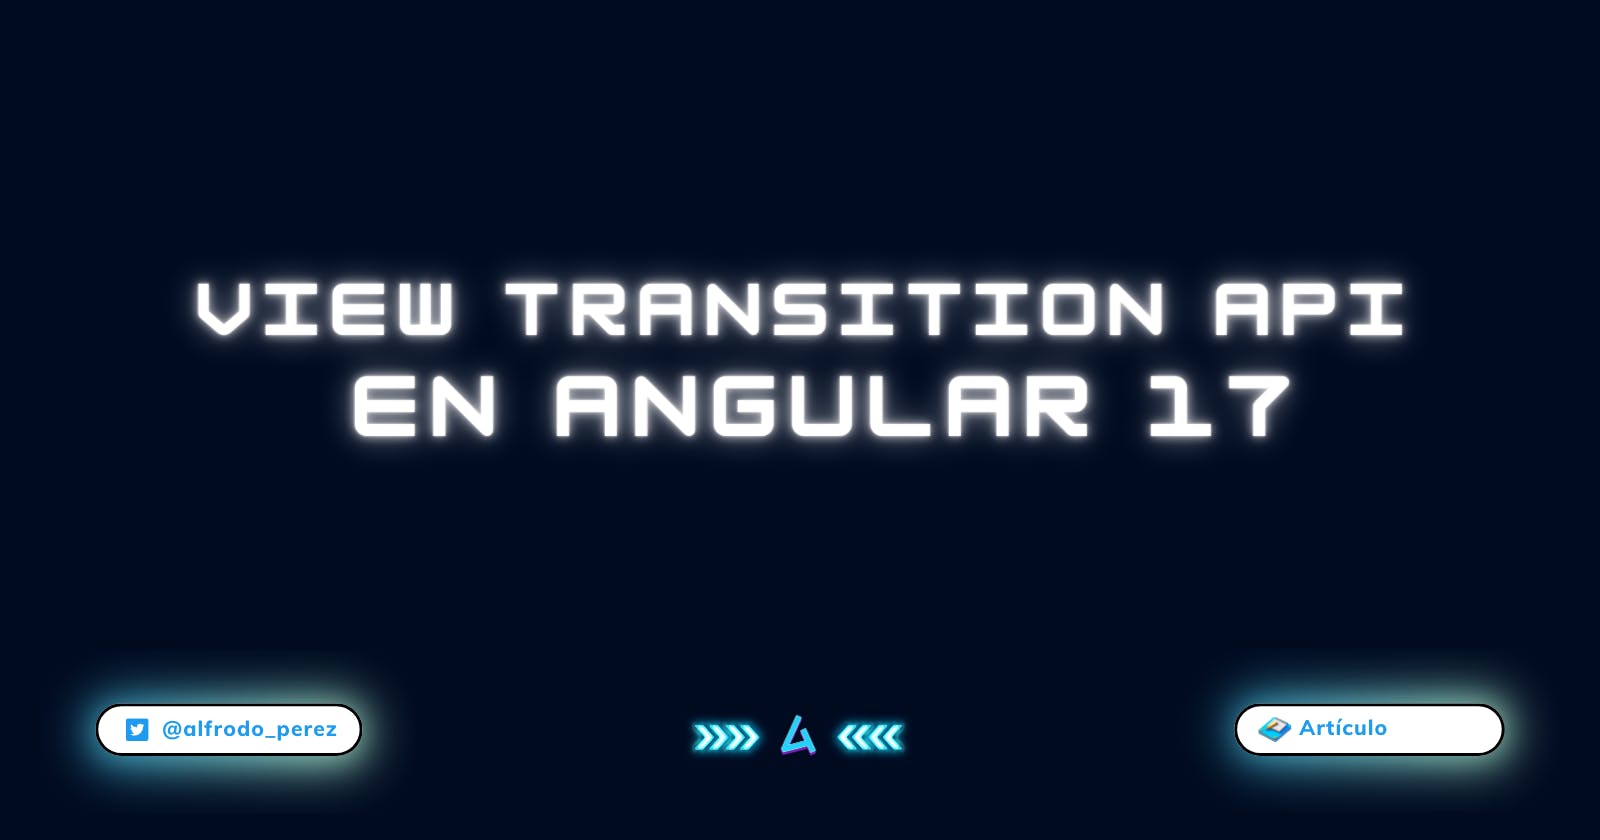 View Transitions API en Angular 17